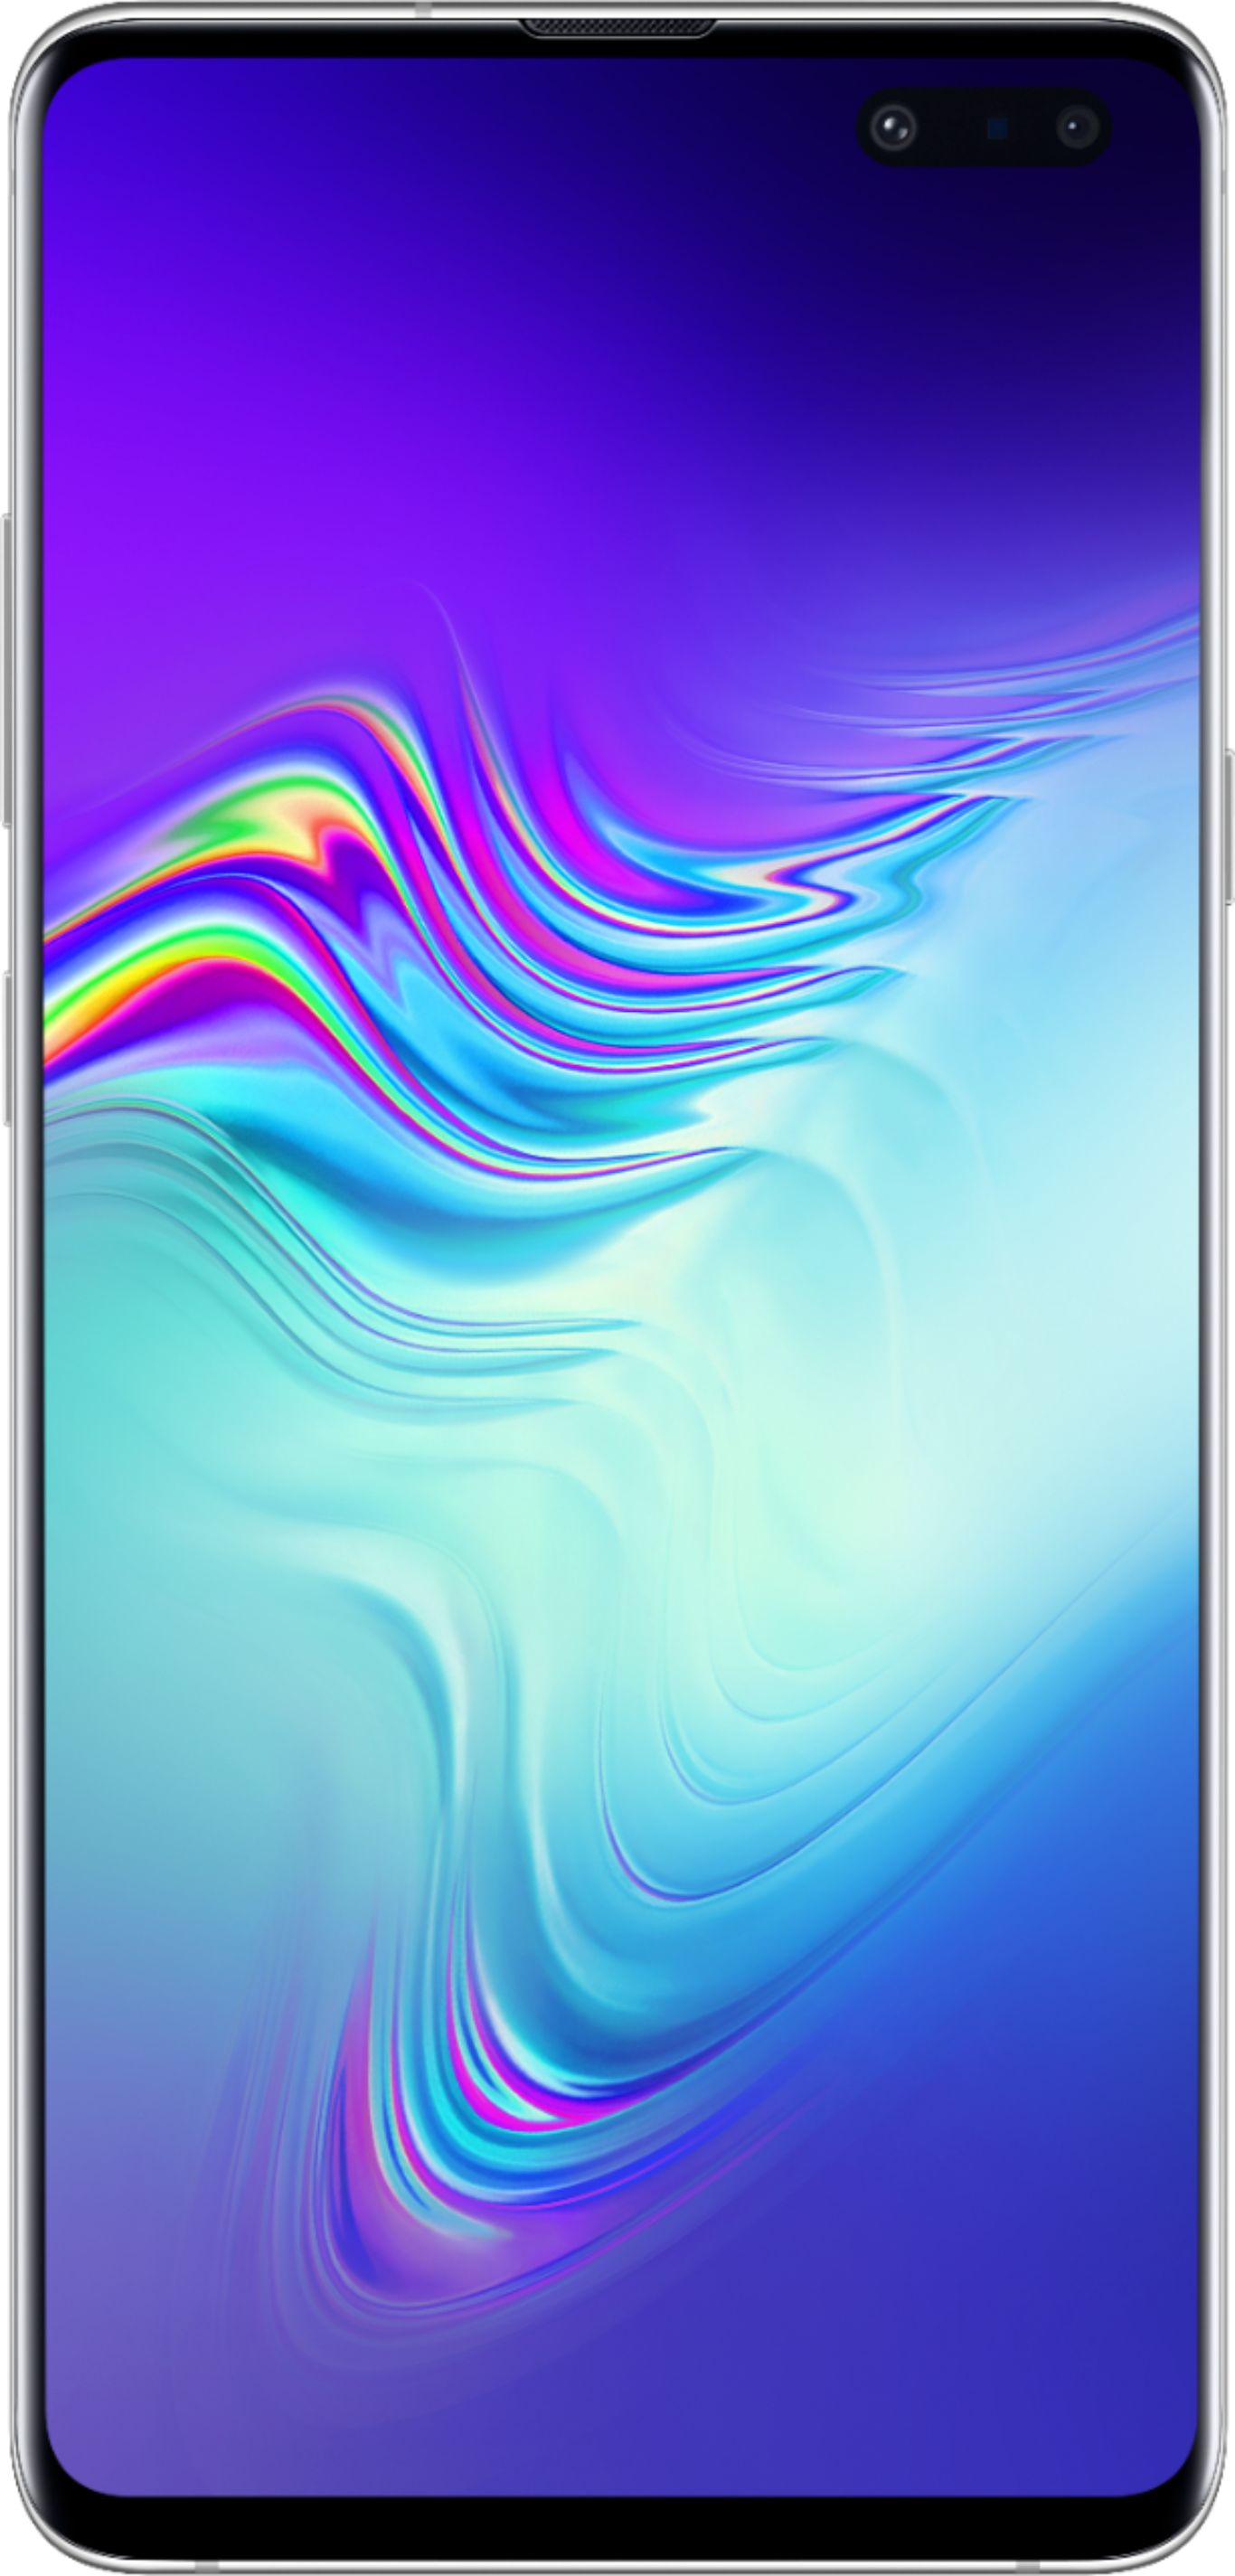 Best Buy Samsung Galaxy S10 5g Enabled 256gb Crown Silver Verizon Smg977uzsv